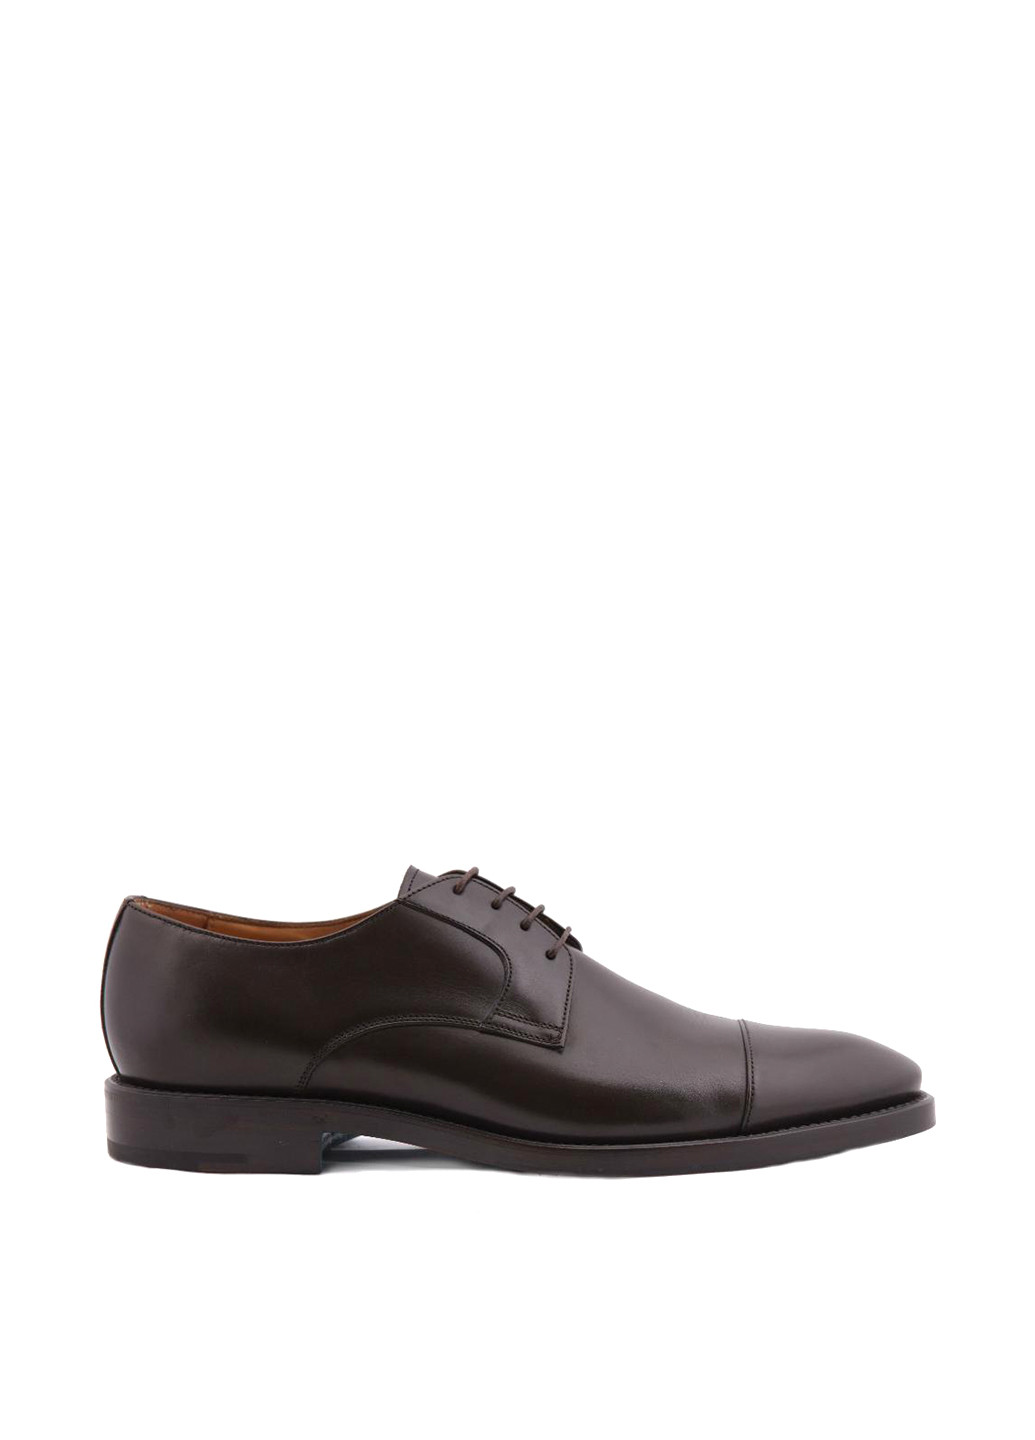 Темно-коричневые классические туфли Sutor Mantellassi на шнурках